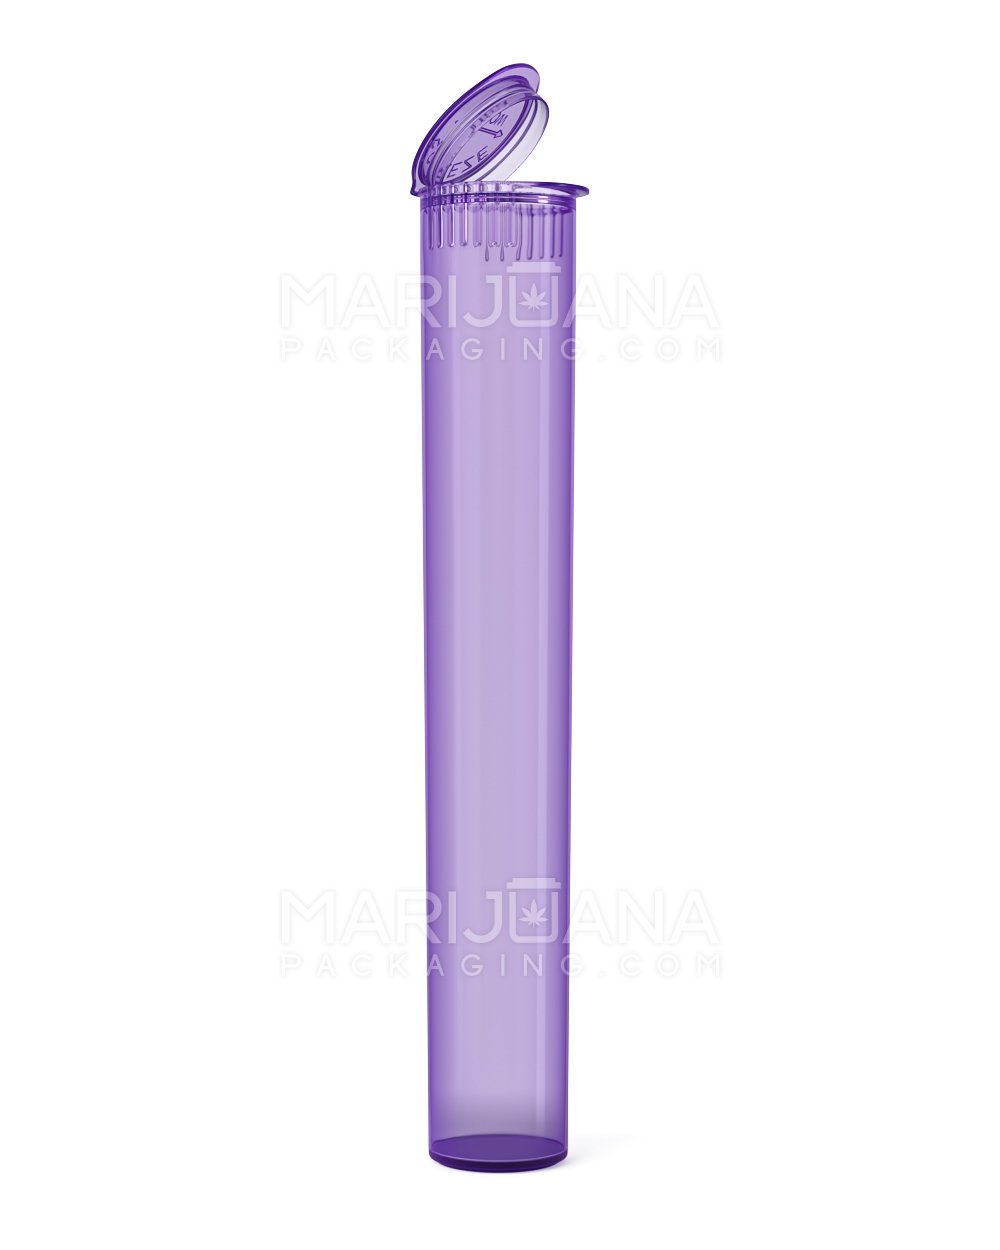 Child Resistant | King Size Pop Top Translucent Plastic Pre-Roll Tubes | 116mm - Purple - 1000 Count - 1